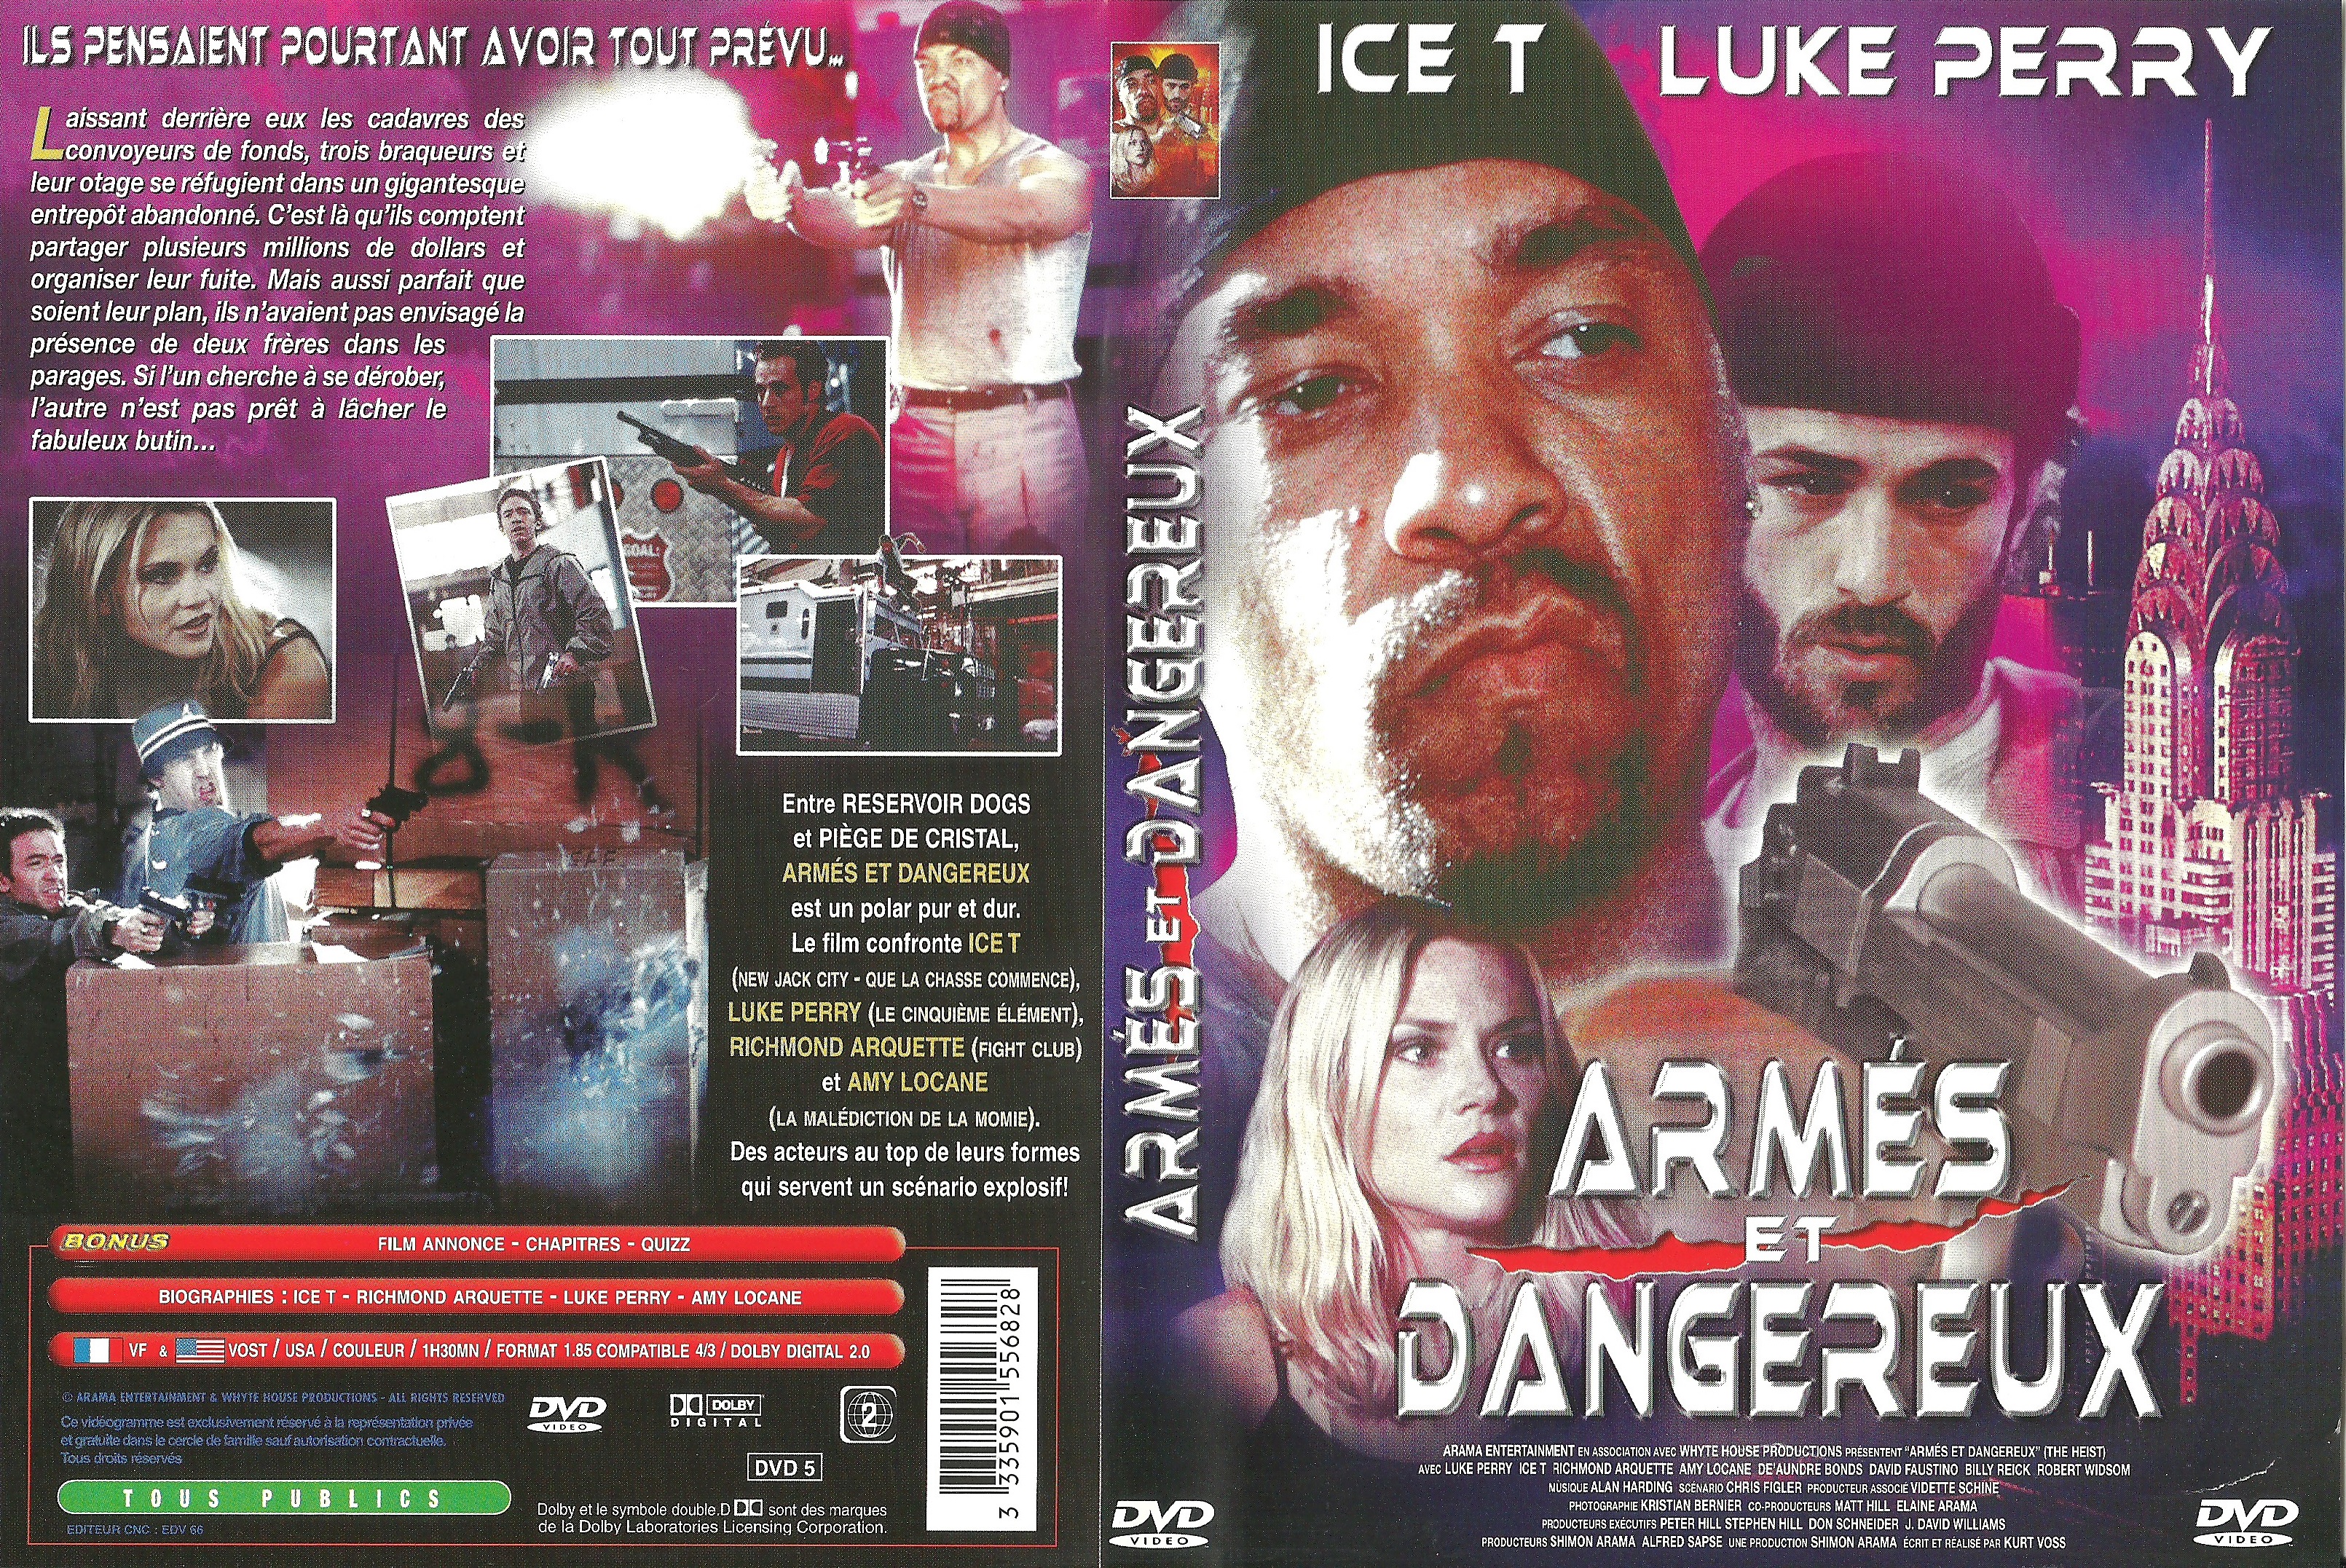 Jaquette DVD Arms Et Dangereux v2